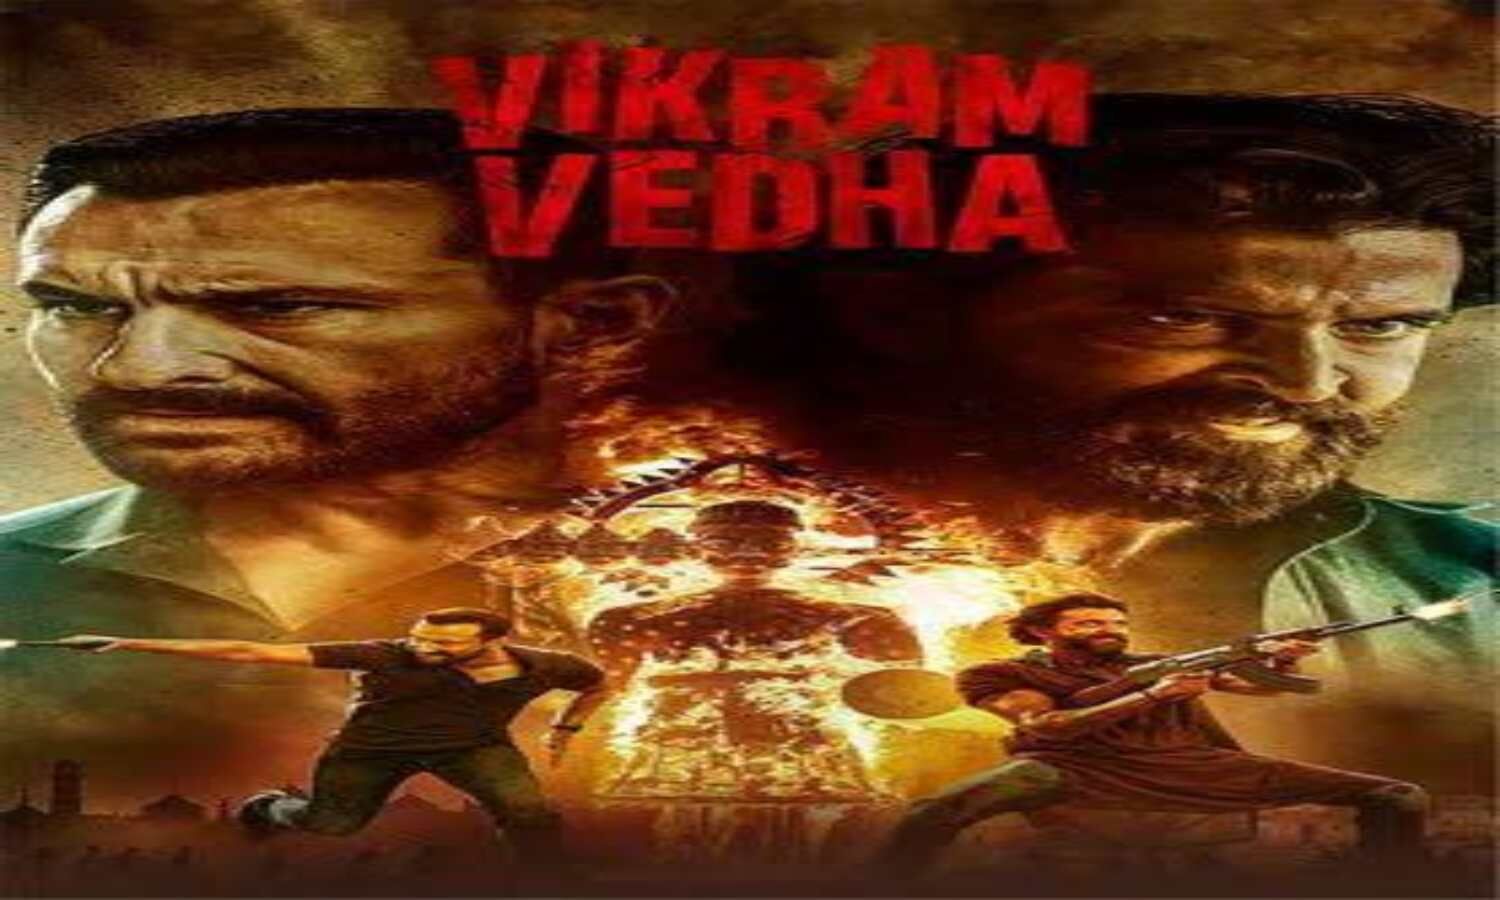 Vikram Vedha Ticket Booking: Advance booking starts for Hrithik Roshan and Saif Ali Khan’s film